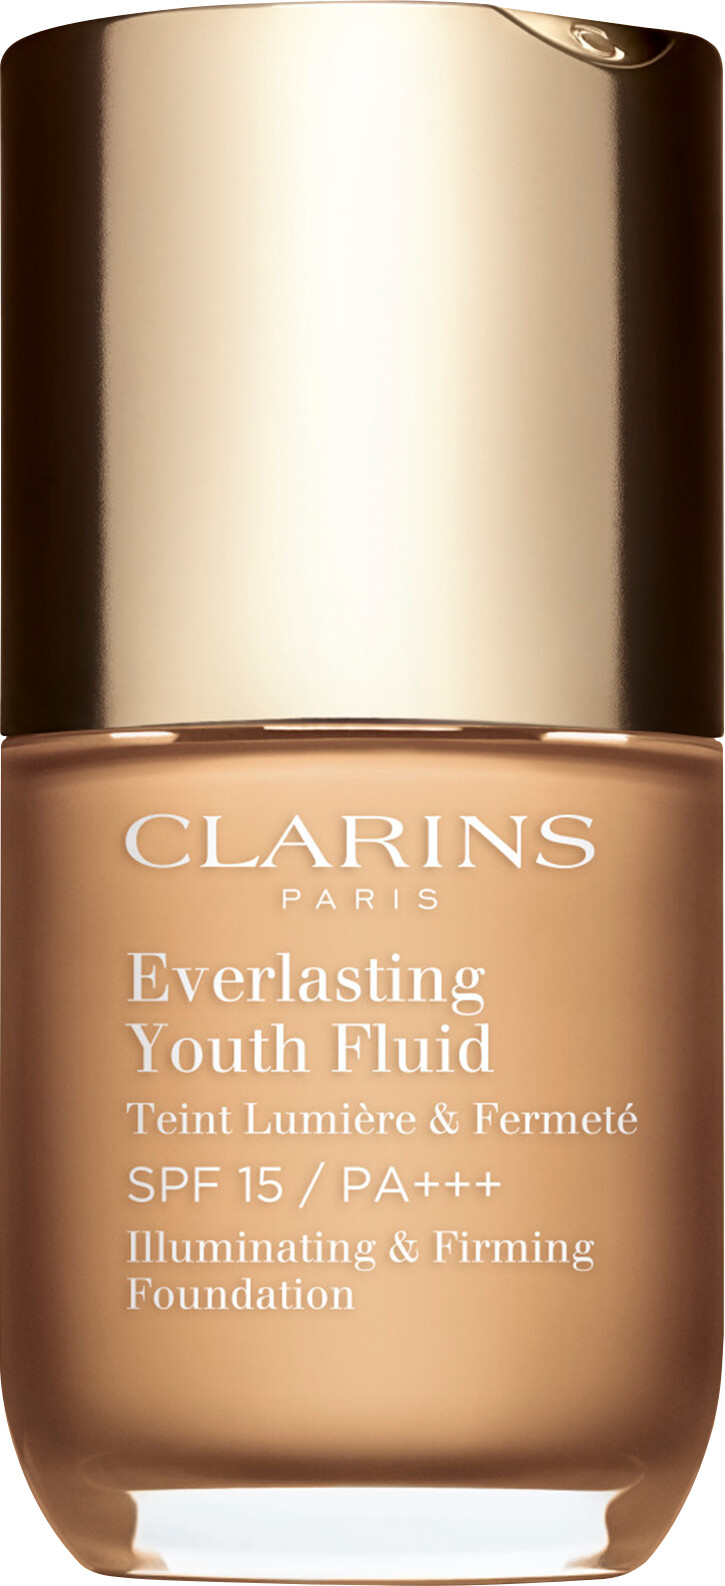 Clarins Everlasting Youth Fluid Illuminating and Firming Foundation SPF15 30ml 106 - Vanilla